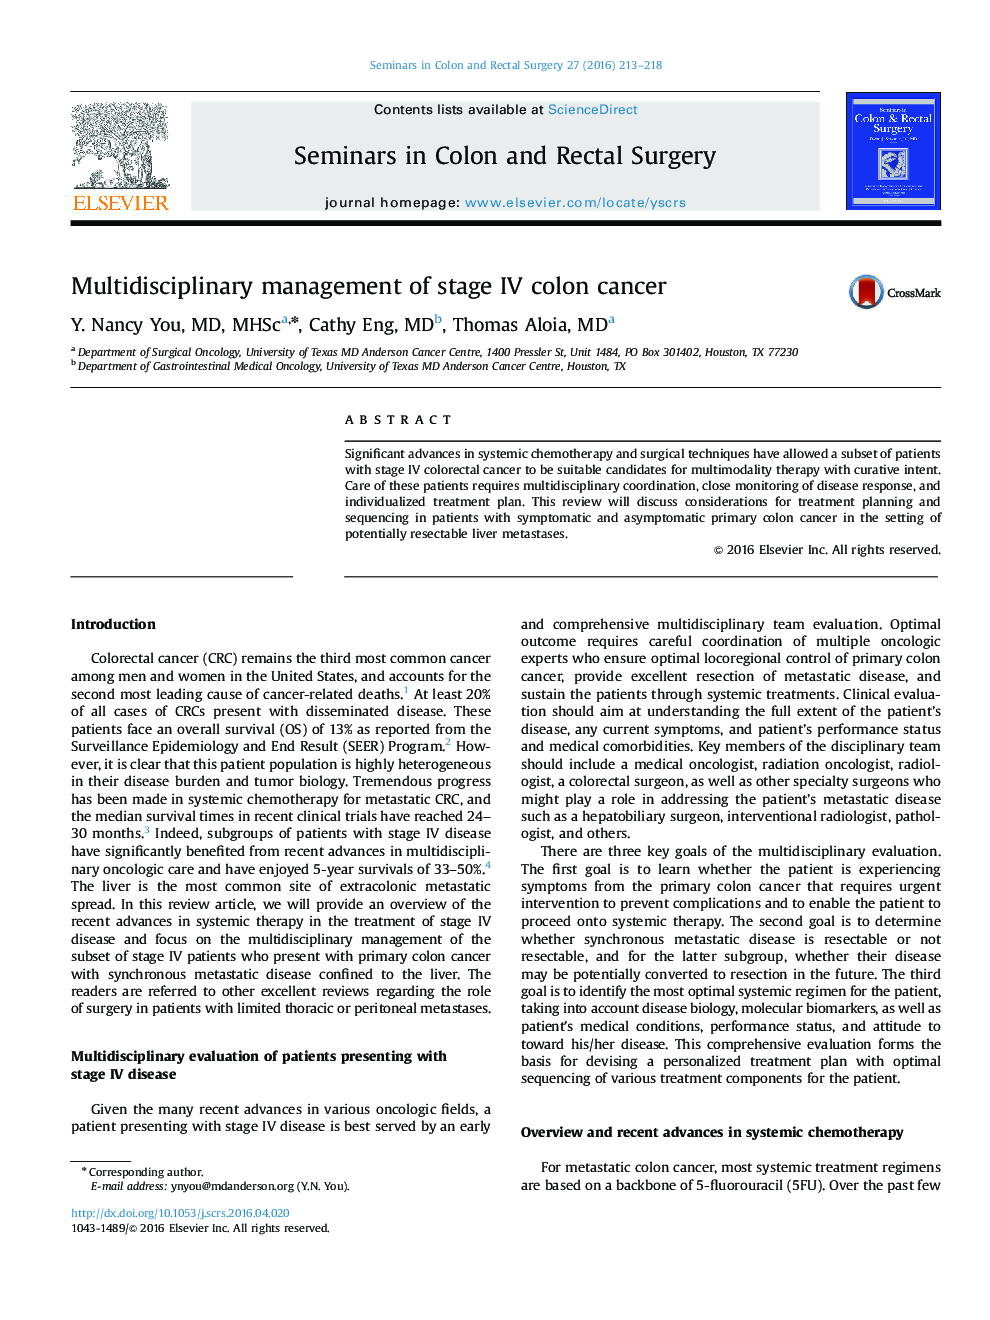 Multidisciplinary management of stage IV colon cancer